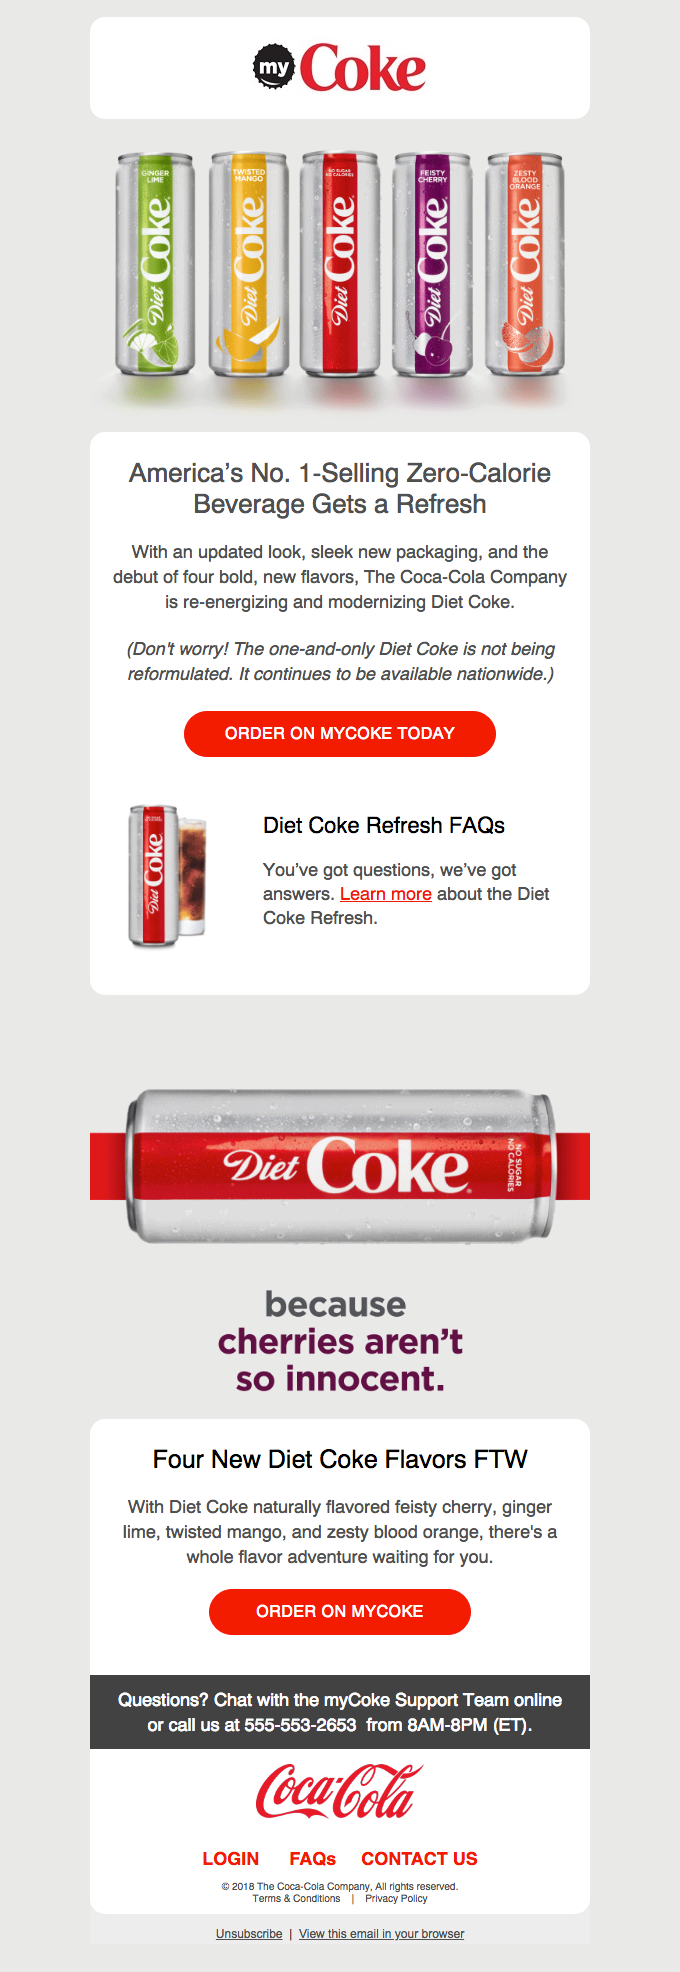 Diet Coke Gets a New Look